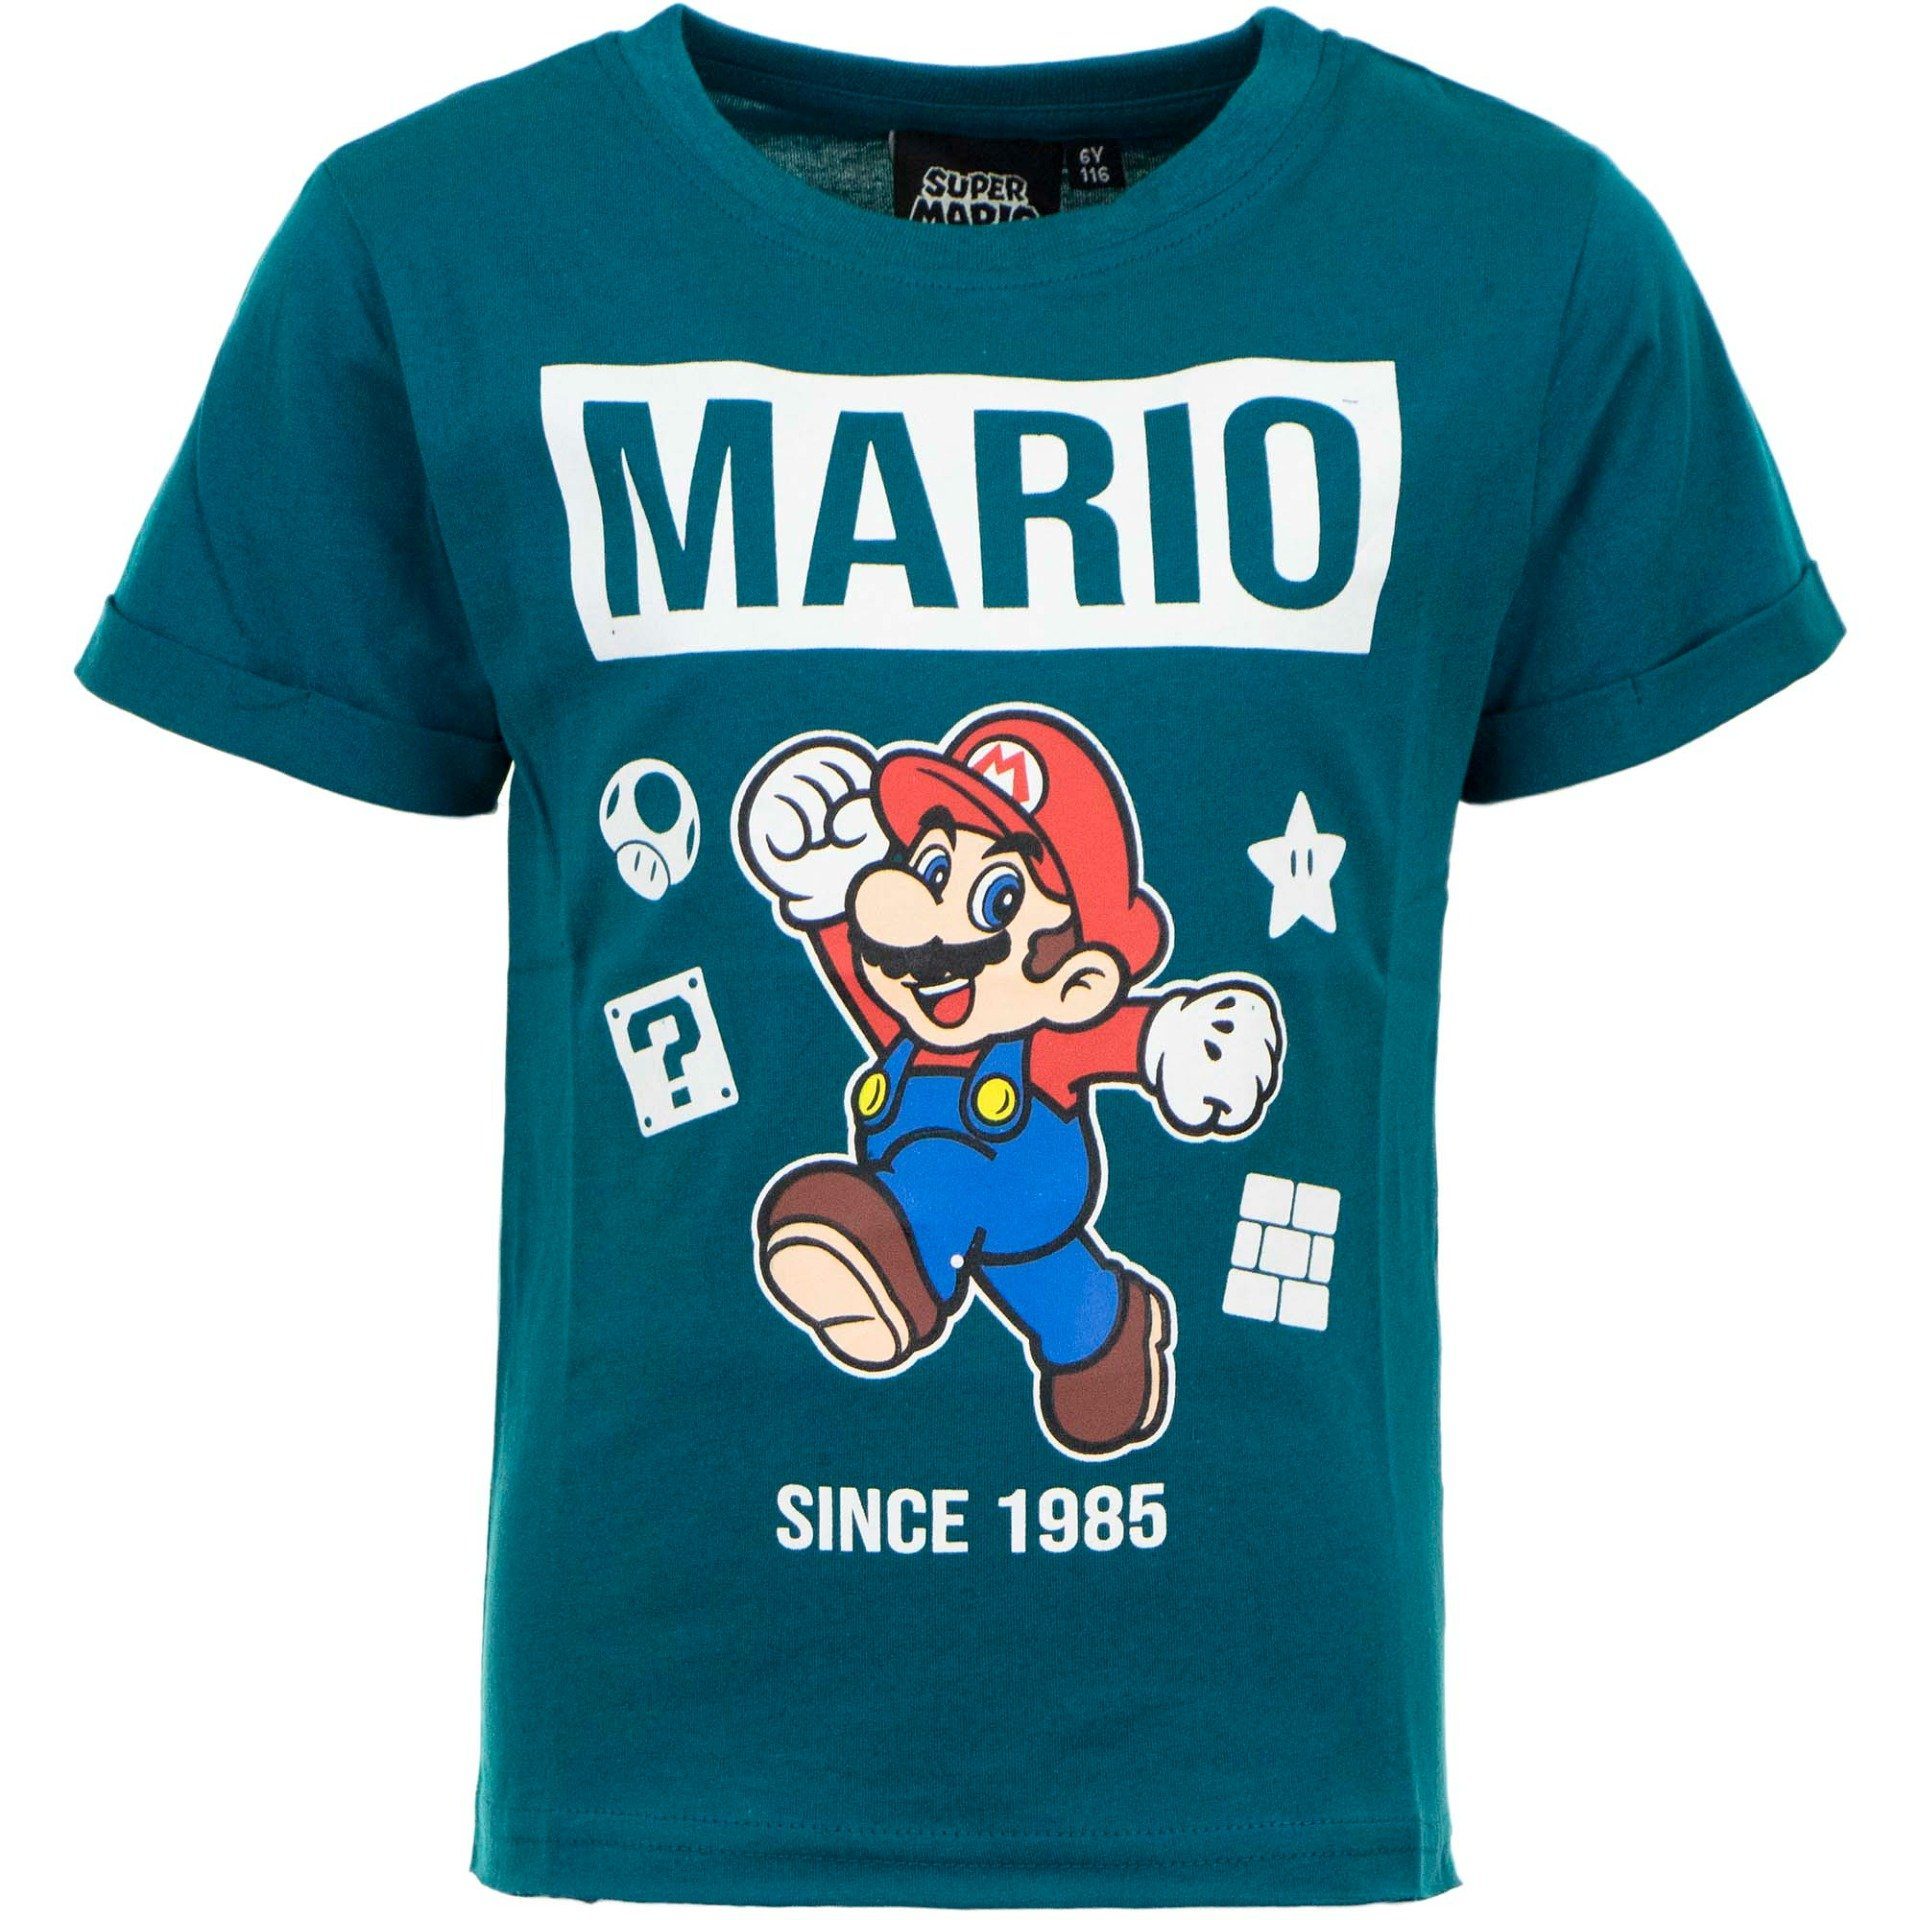 Kinder Kids (Gr. 92 -146) Super Mario Print-Shirt Super Mario Kinder T-Shirt Petrol since 1985 Jungen und Mädchen Gr. 98 104 110